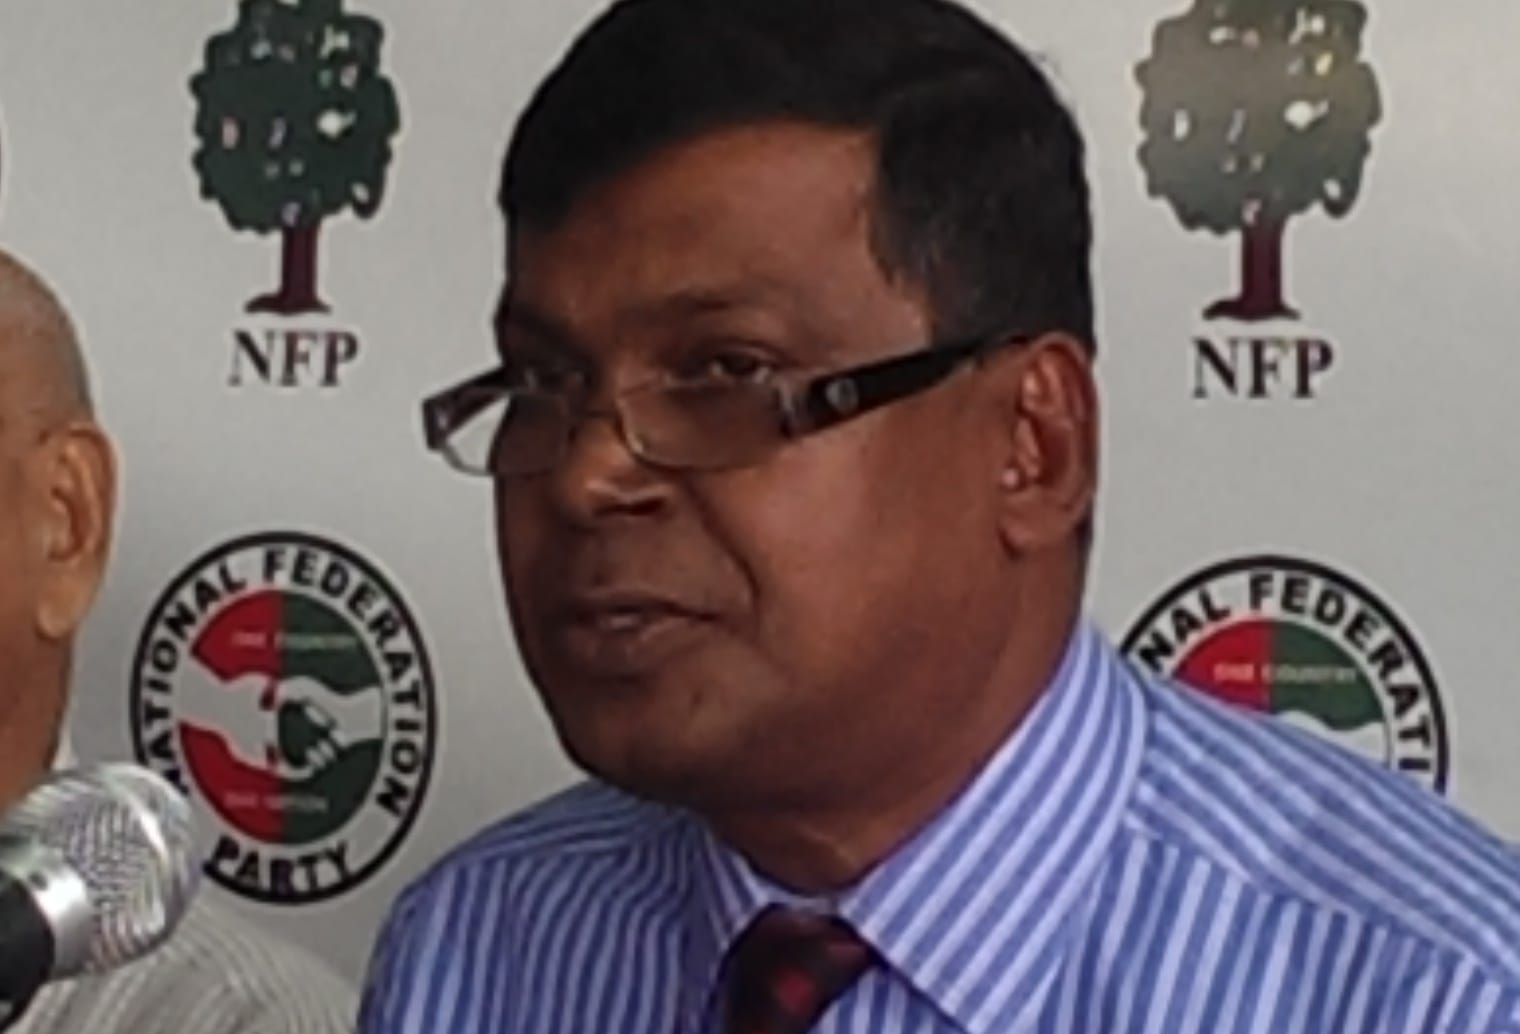 The leader of Fiji's National Federation Party, Biman Prasad